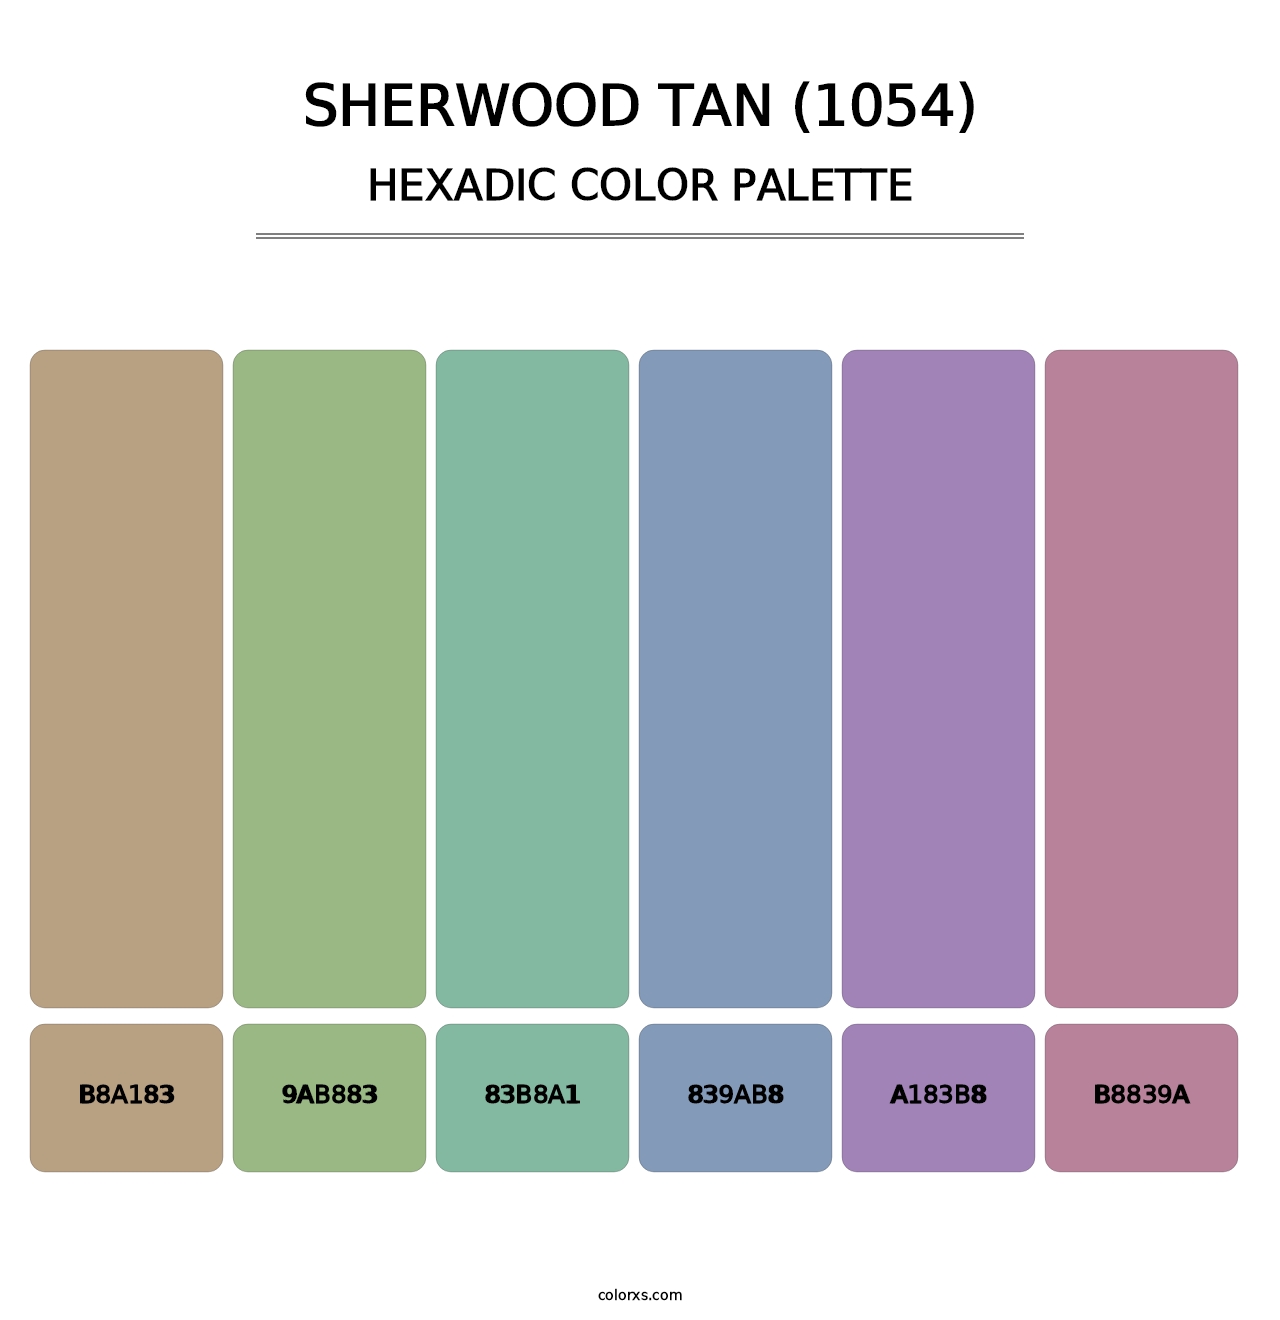 Sherwood Tan (1054) - Hexadic Color Palette